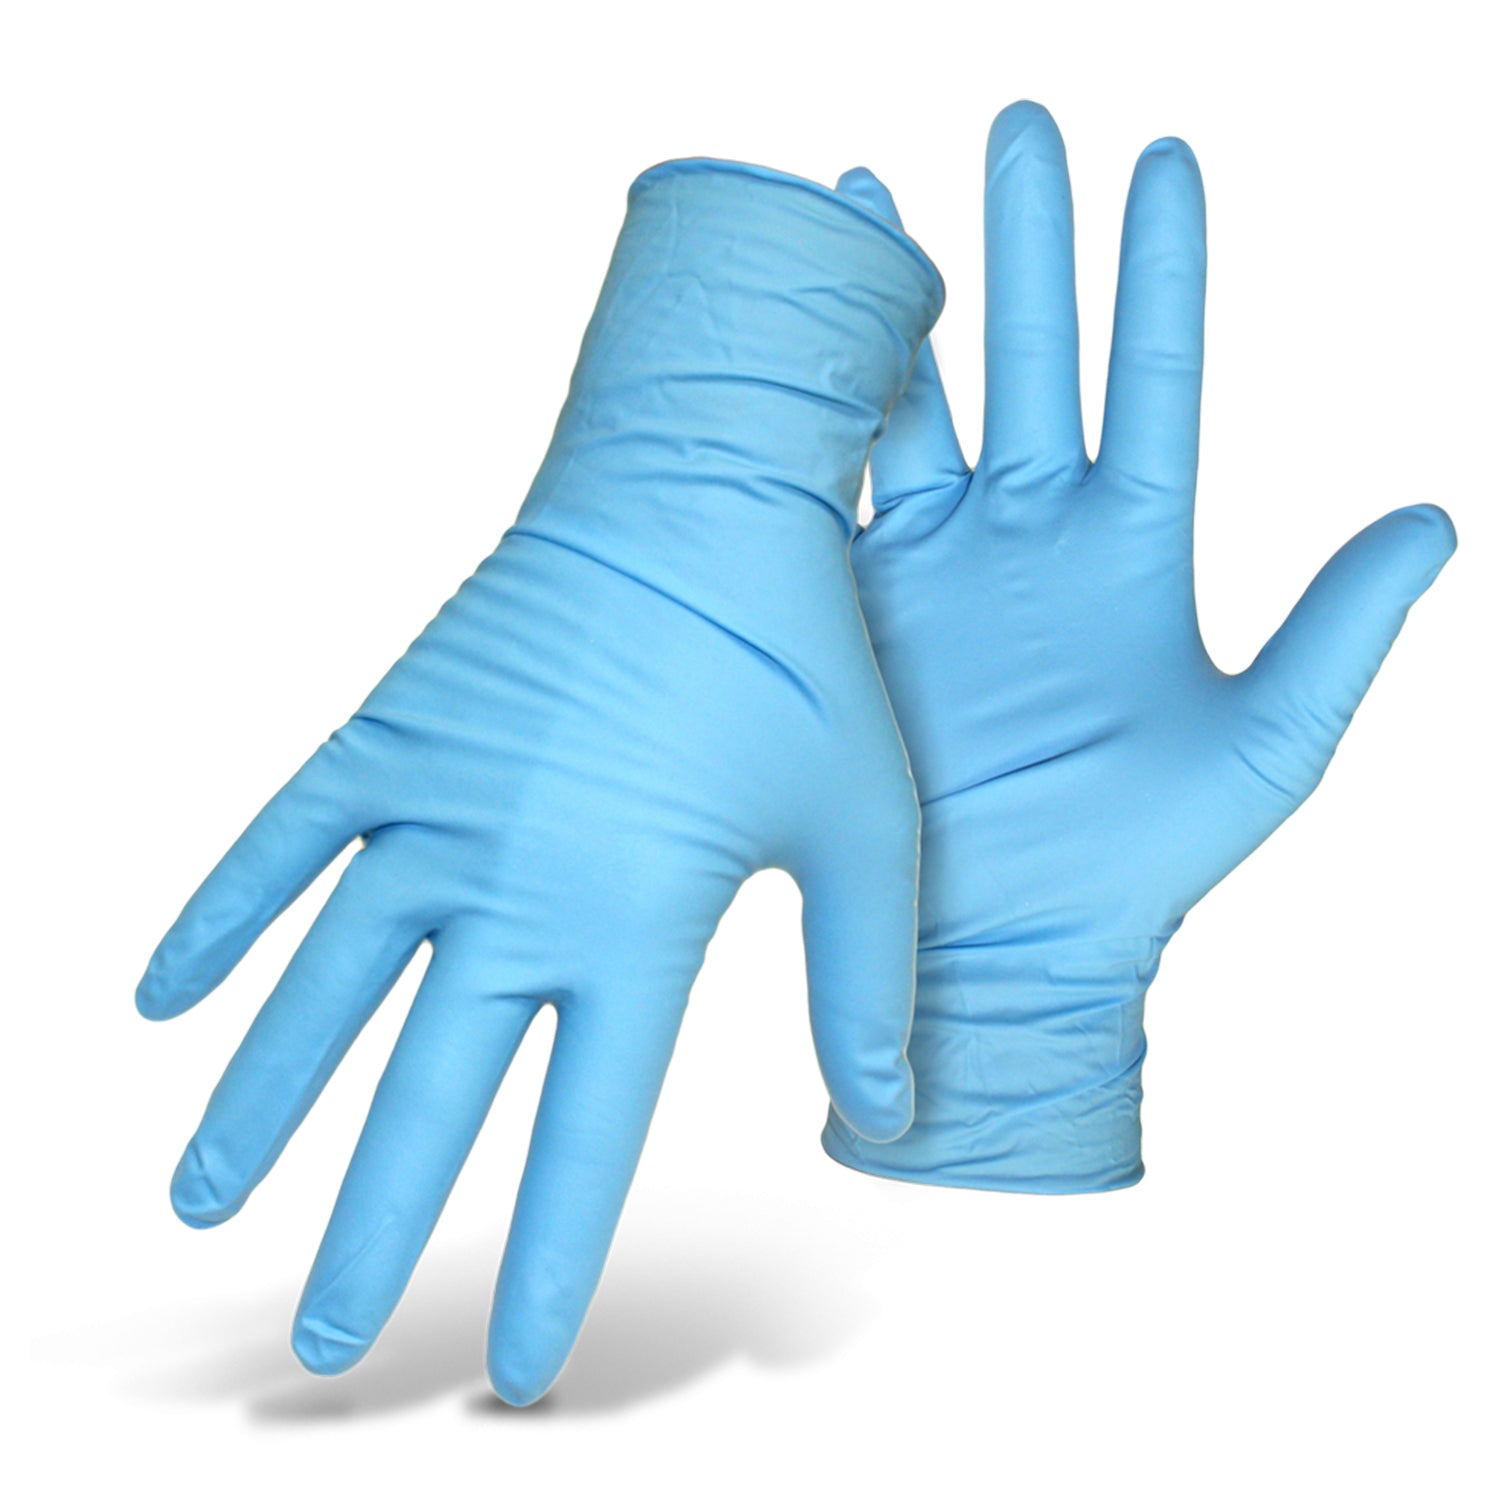 Premier AF Nitrile Examination Gloves | Sterile | Latex Free | Large | Pack of 50 Pairs (2)